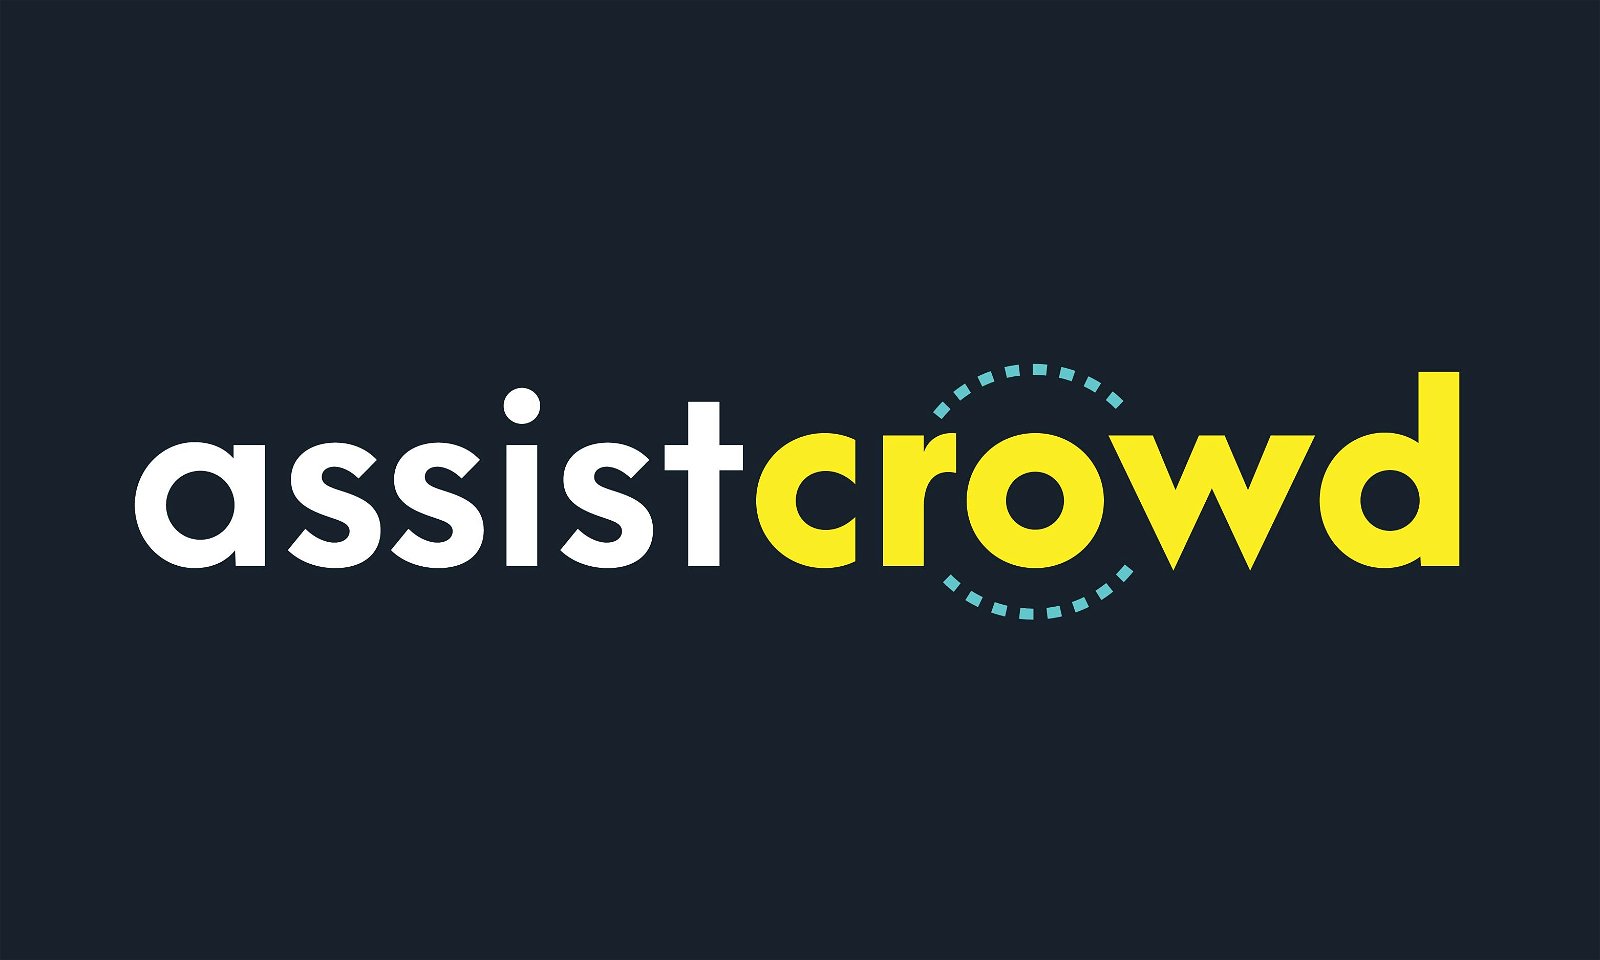 AssistCrowd.com - Creative brandable domain for sale